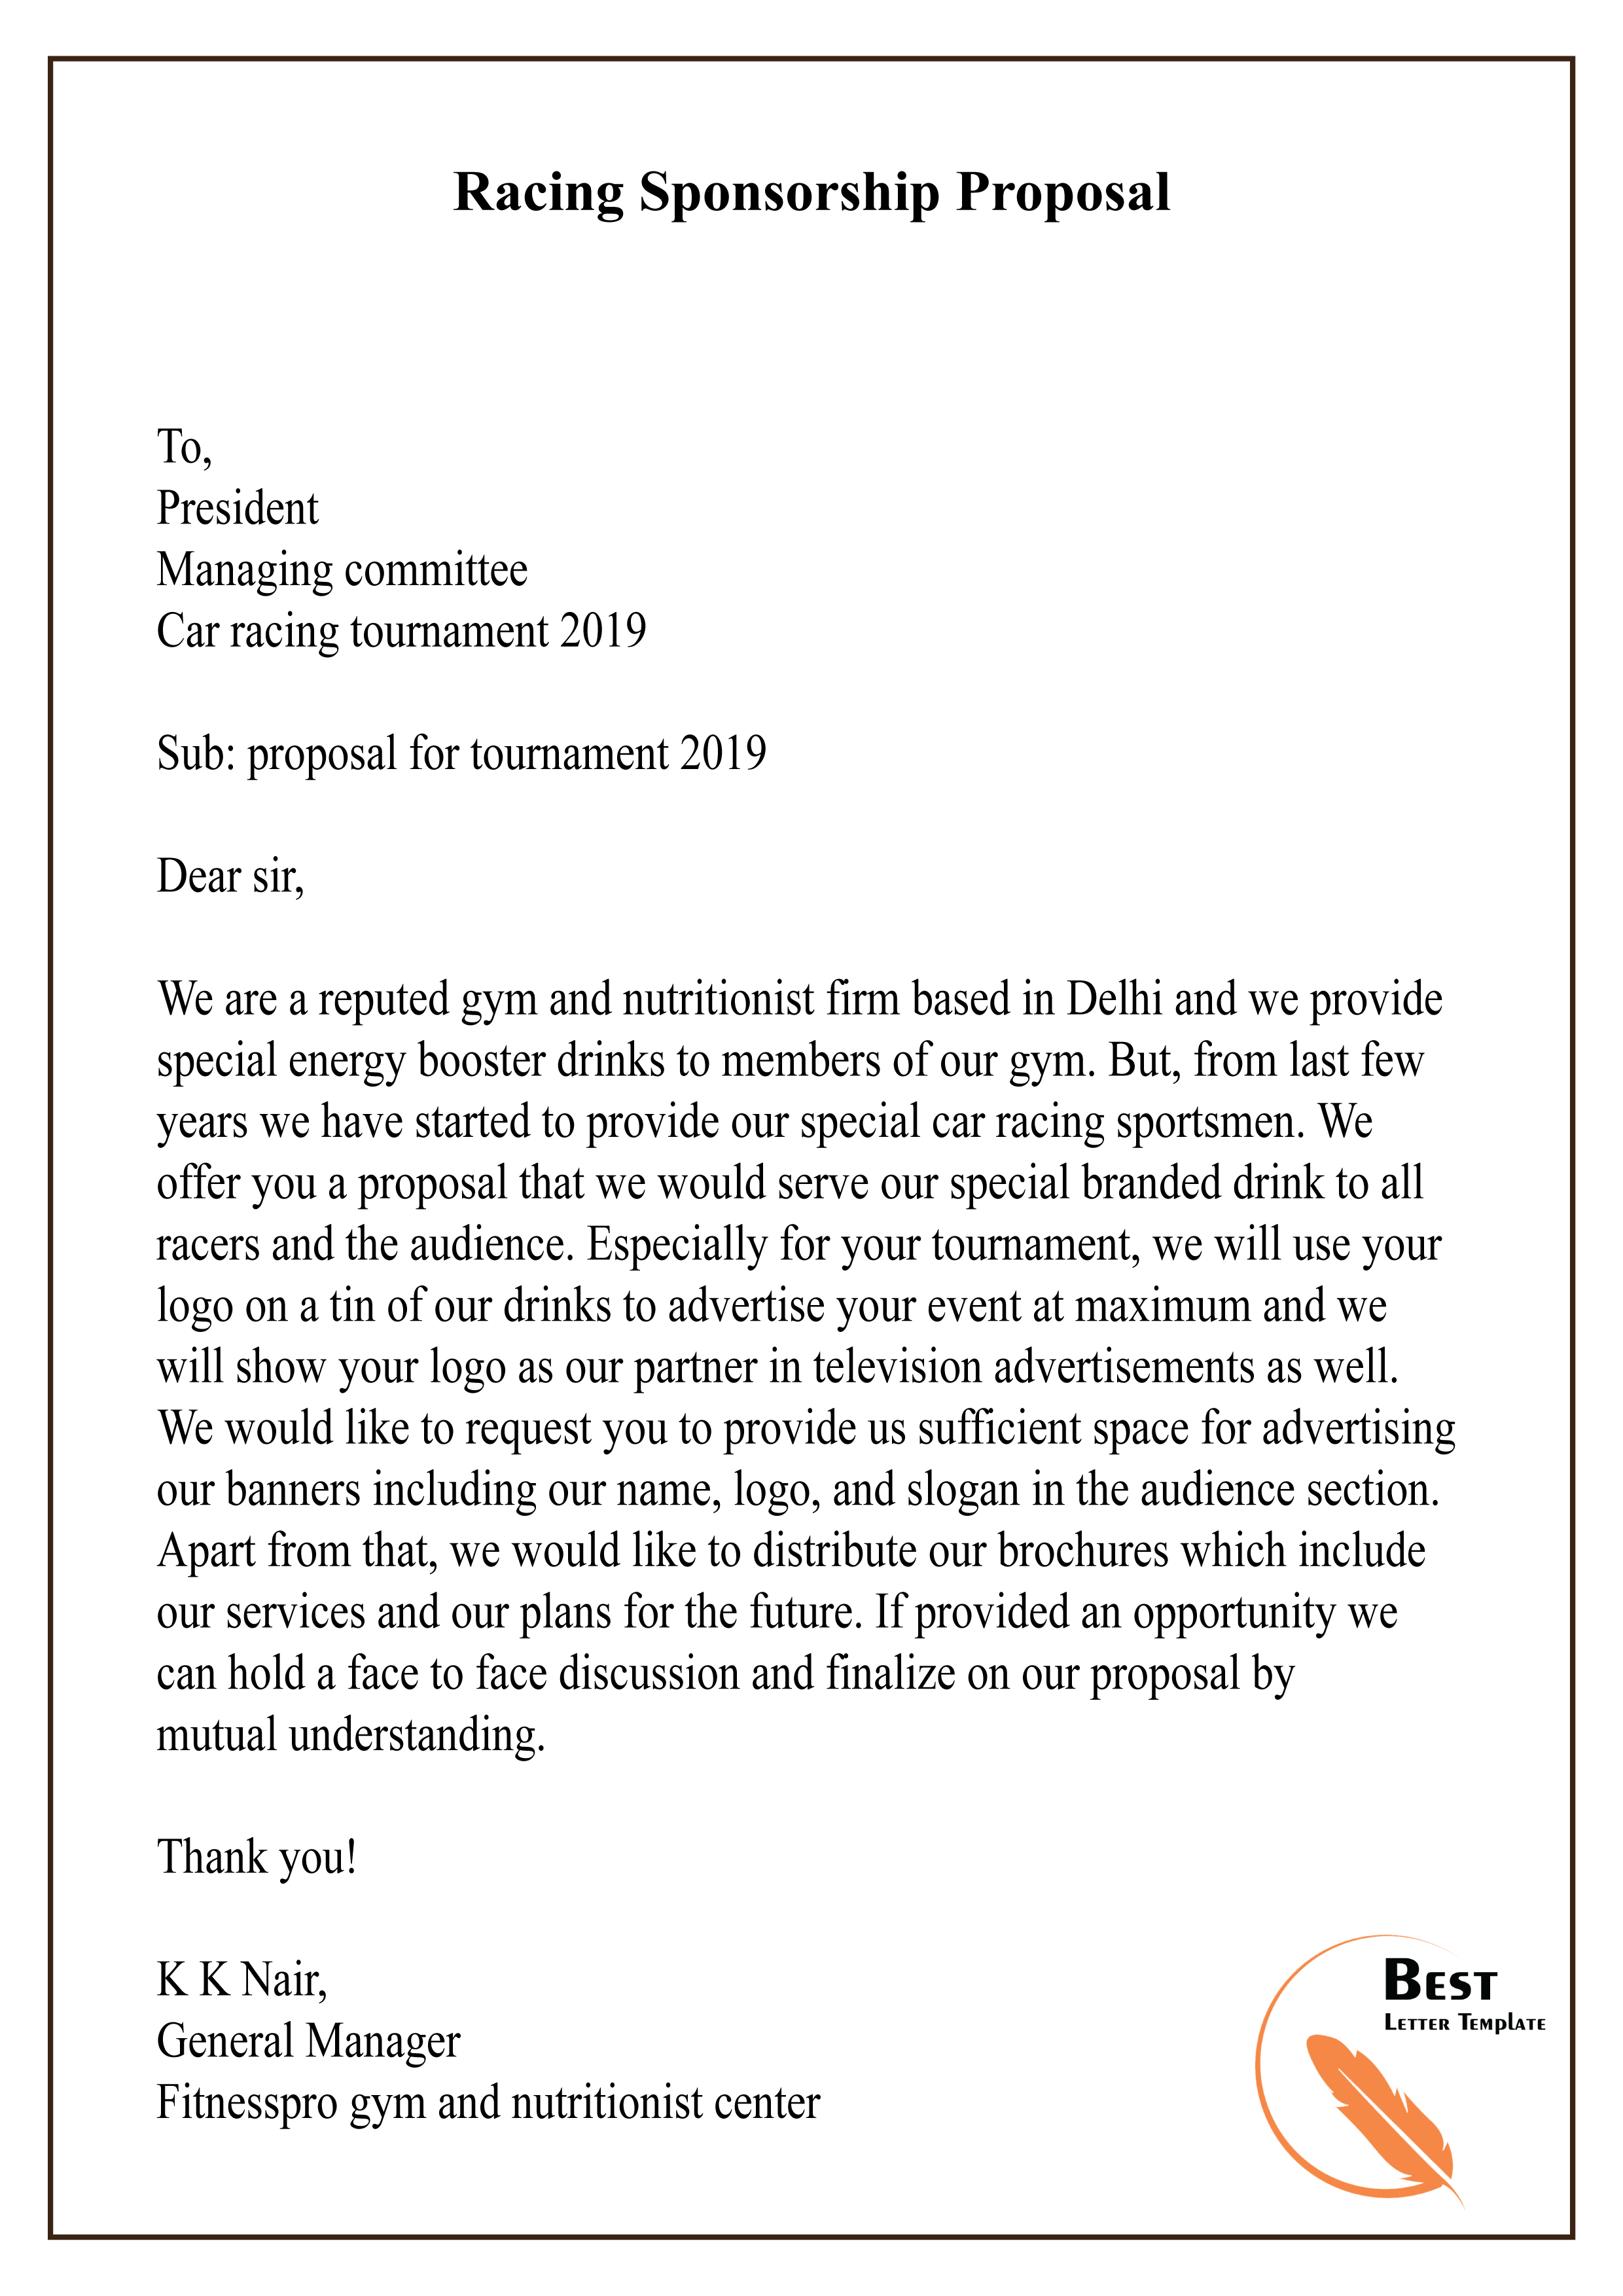 Racing Sponsorship Proposal 01 Best Letter Template